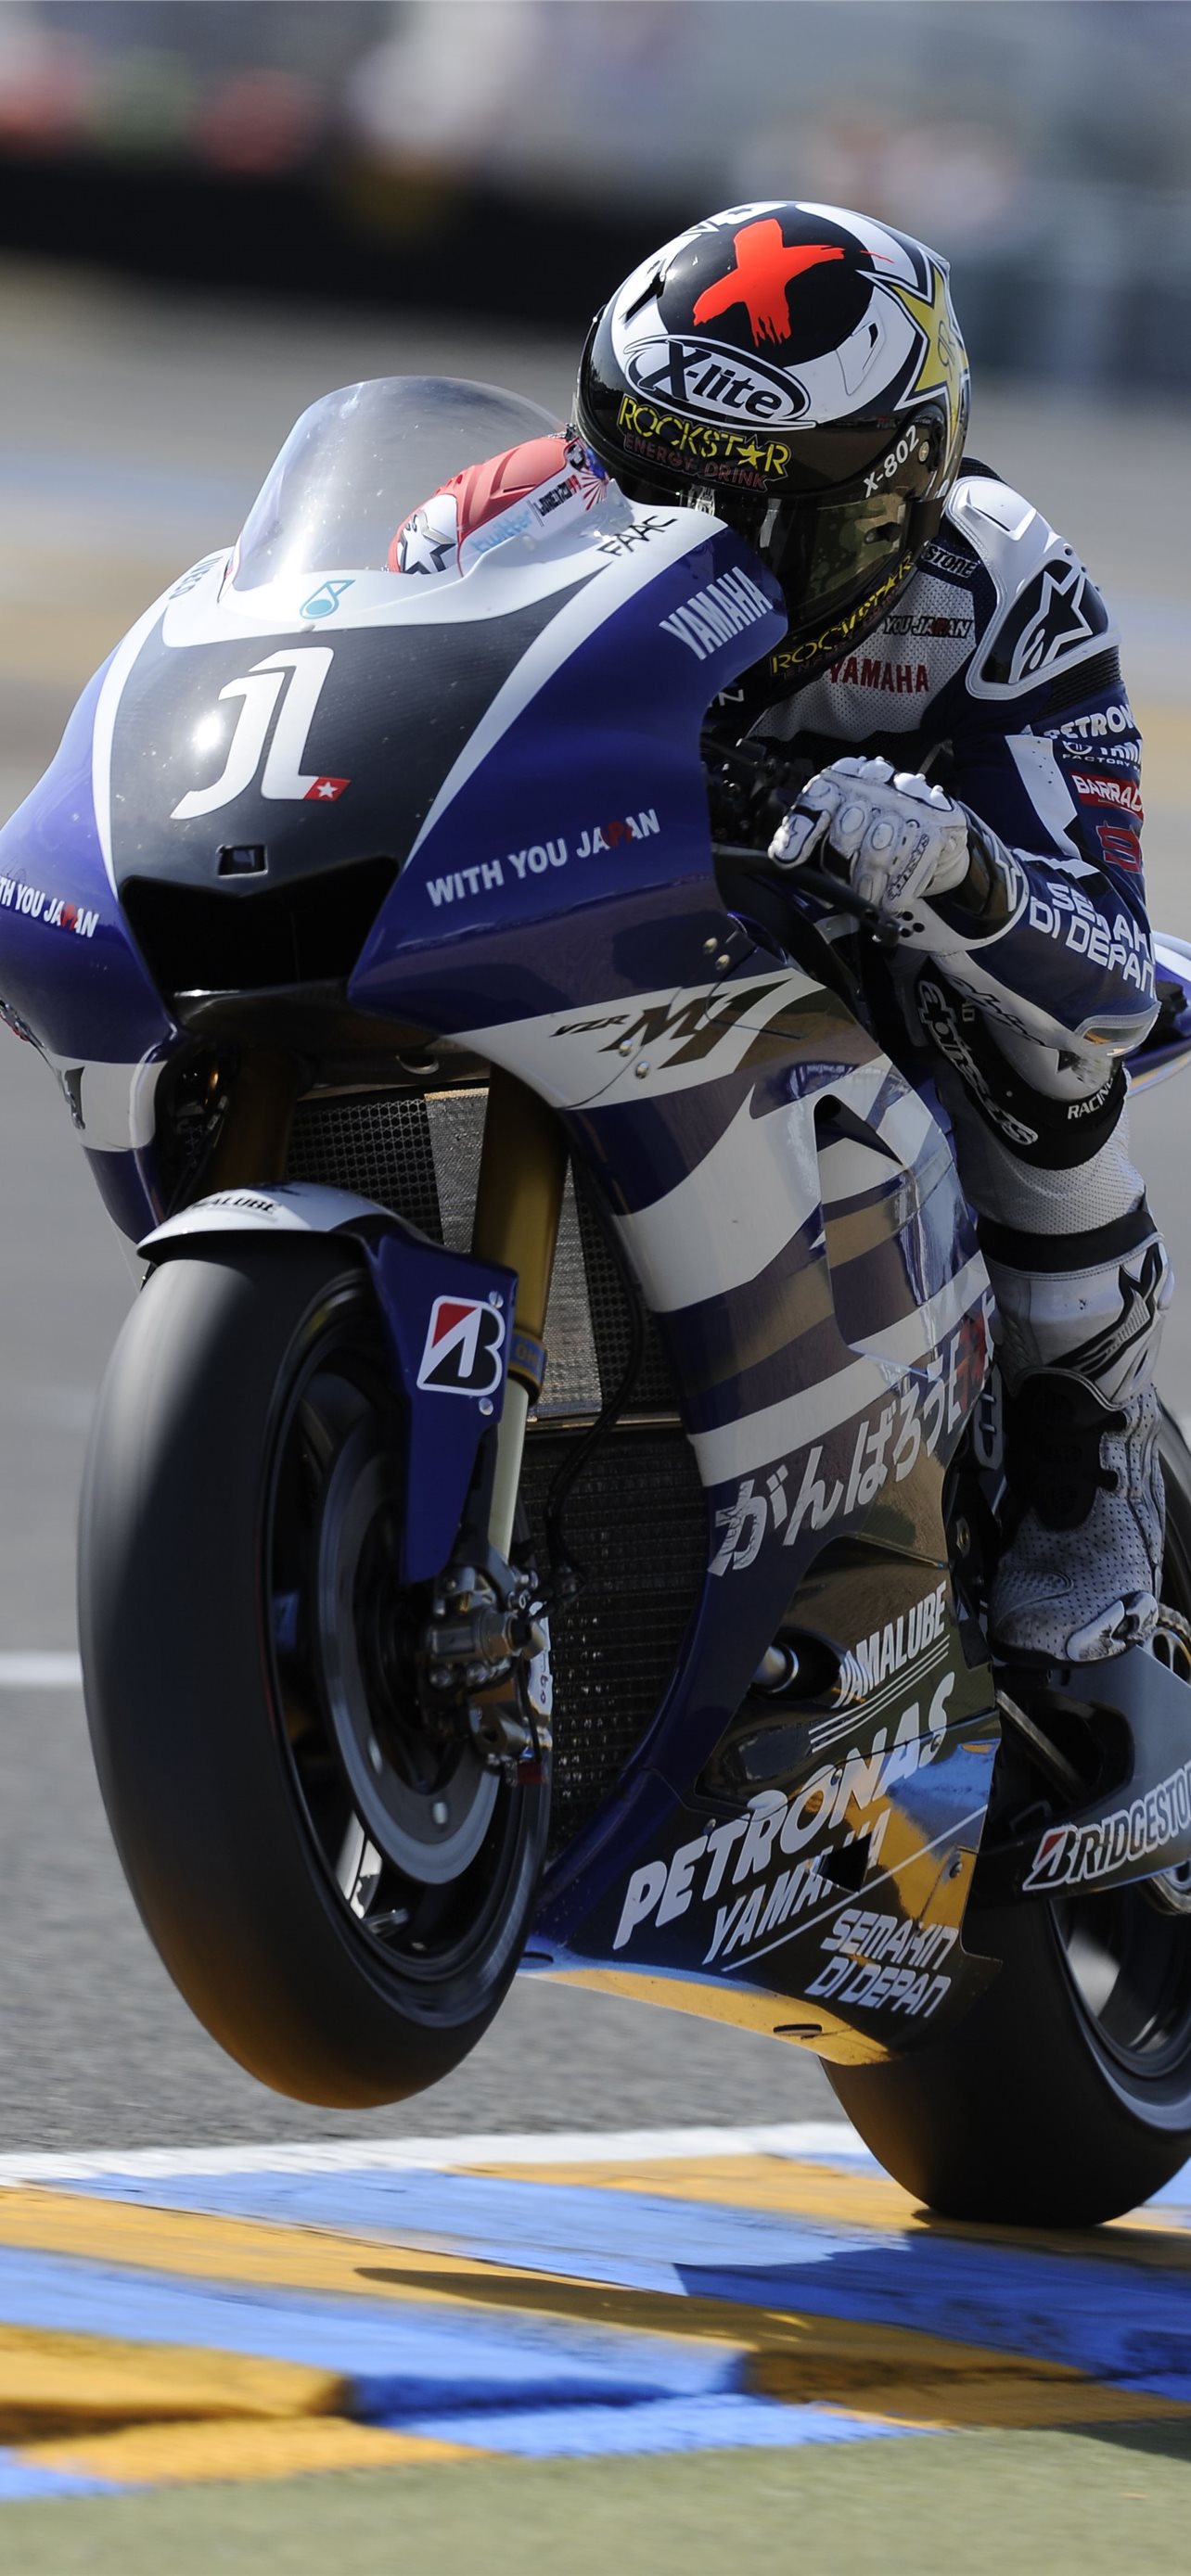 MotoGP 22 Wallpaper 4K, 2022 Games, Racing bikes, #7975